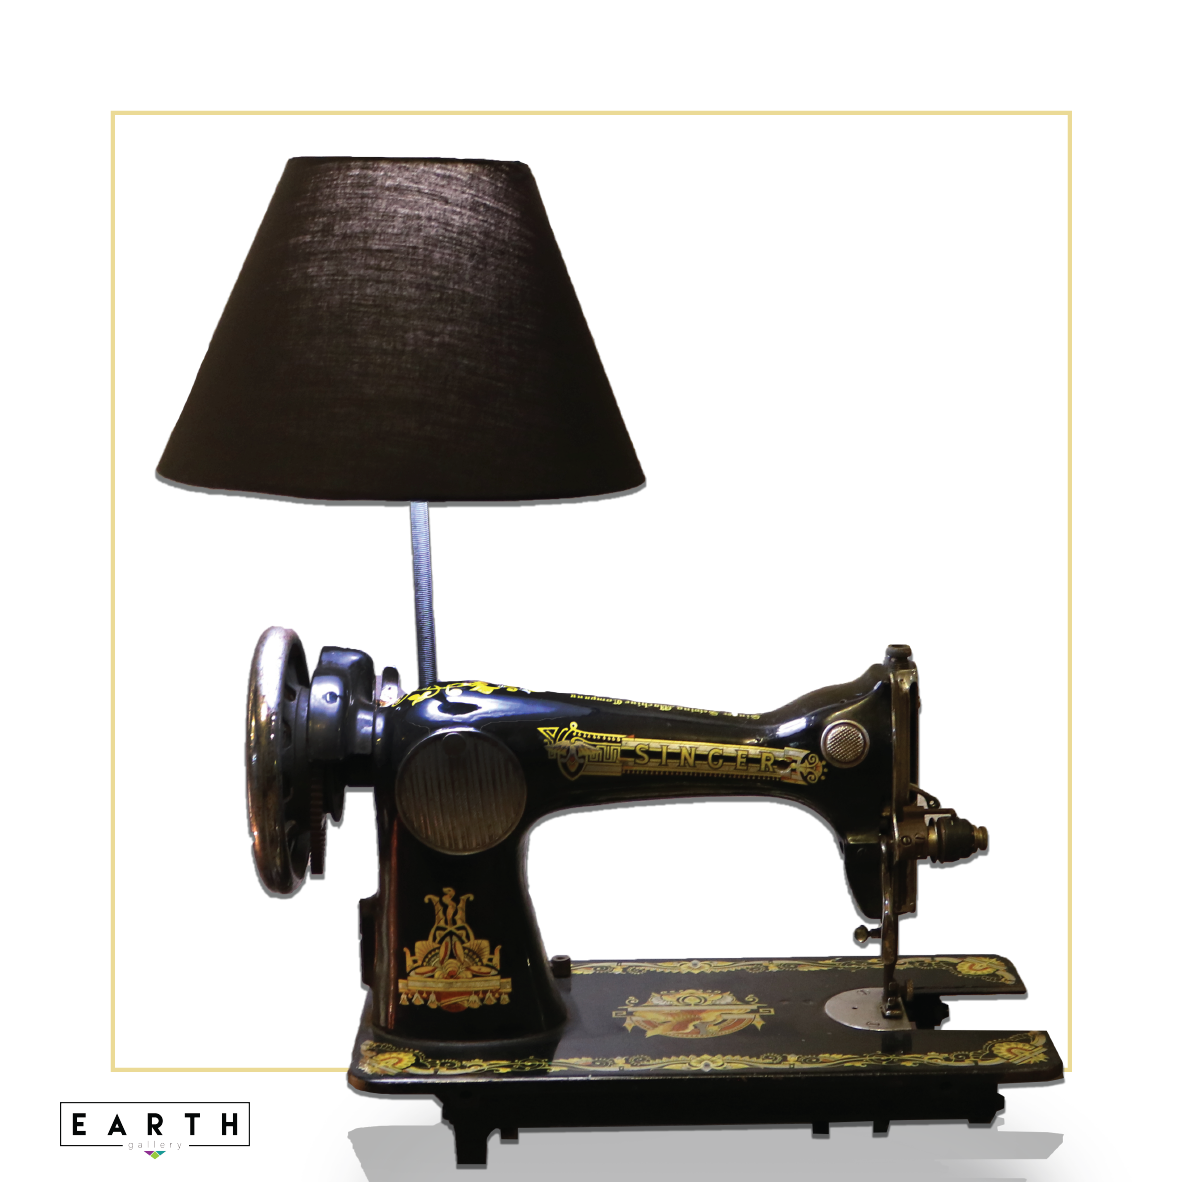 Vintage Sewing Machine Desk Lamp